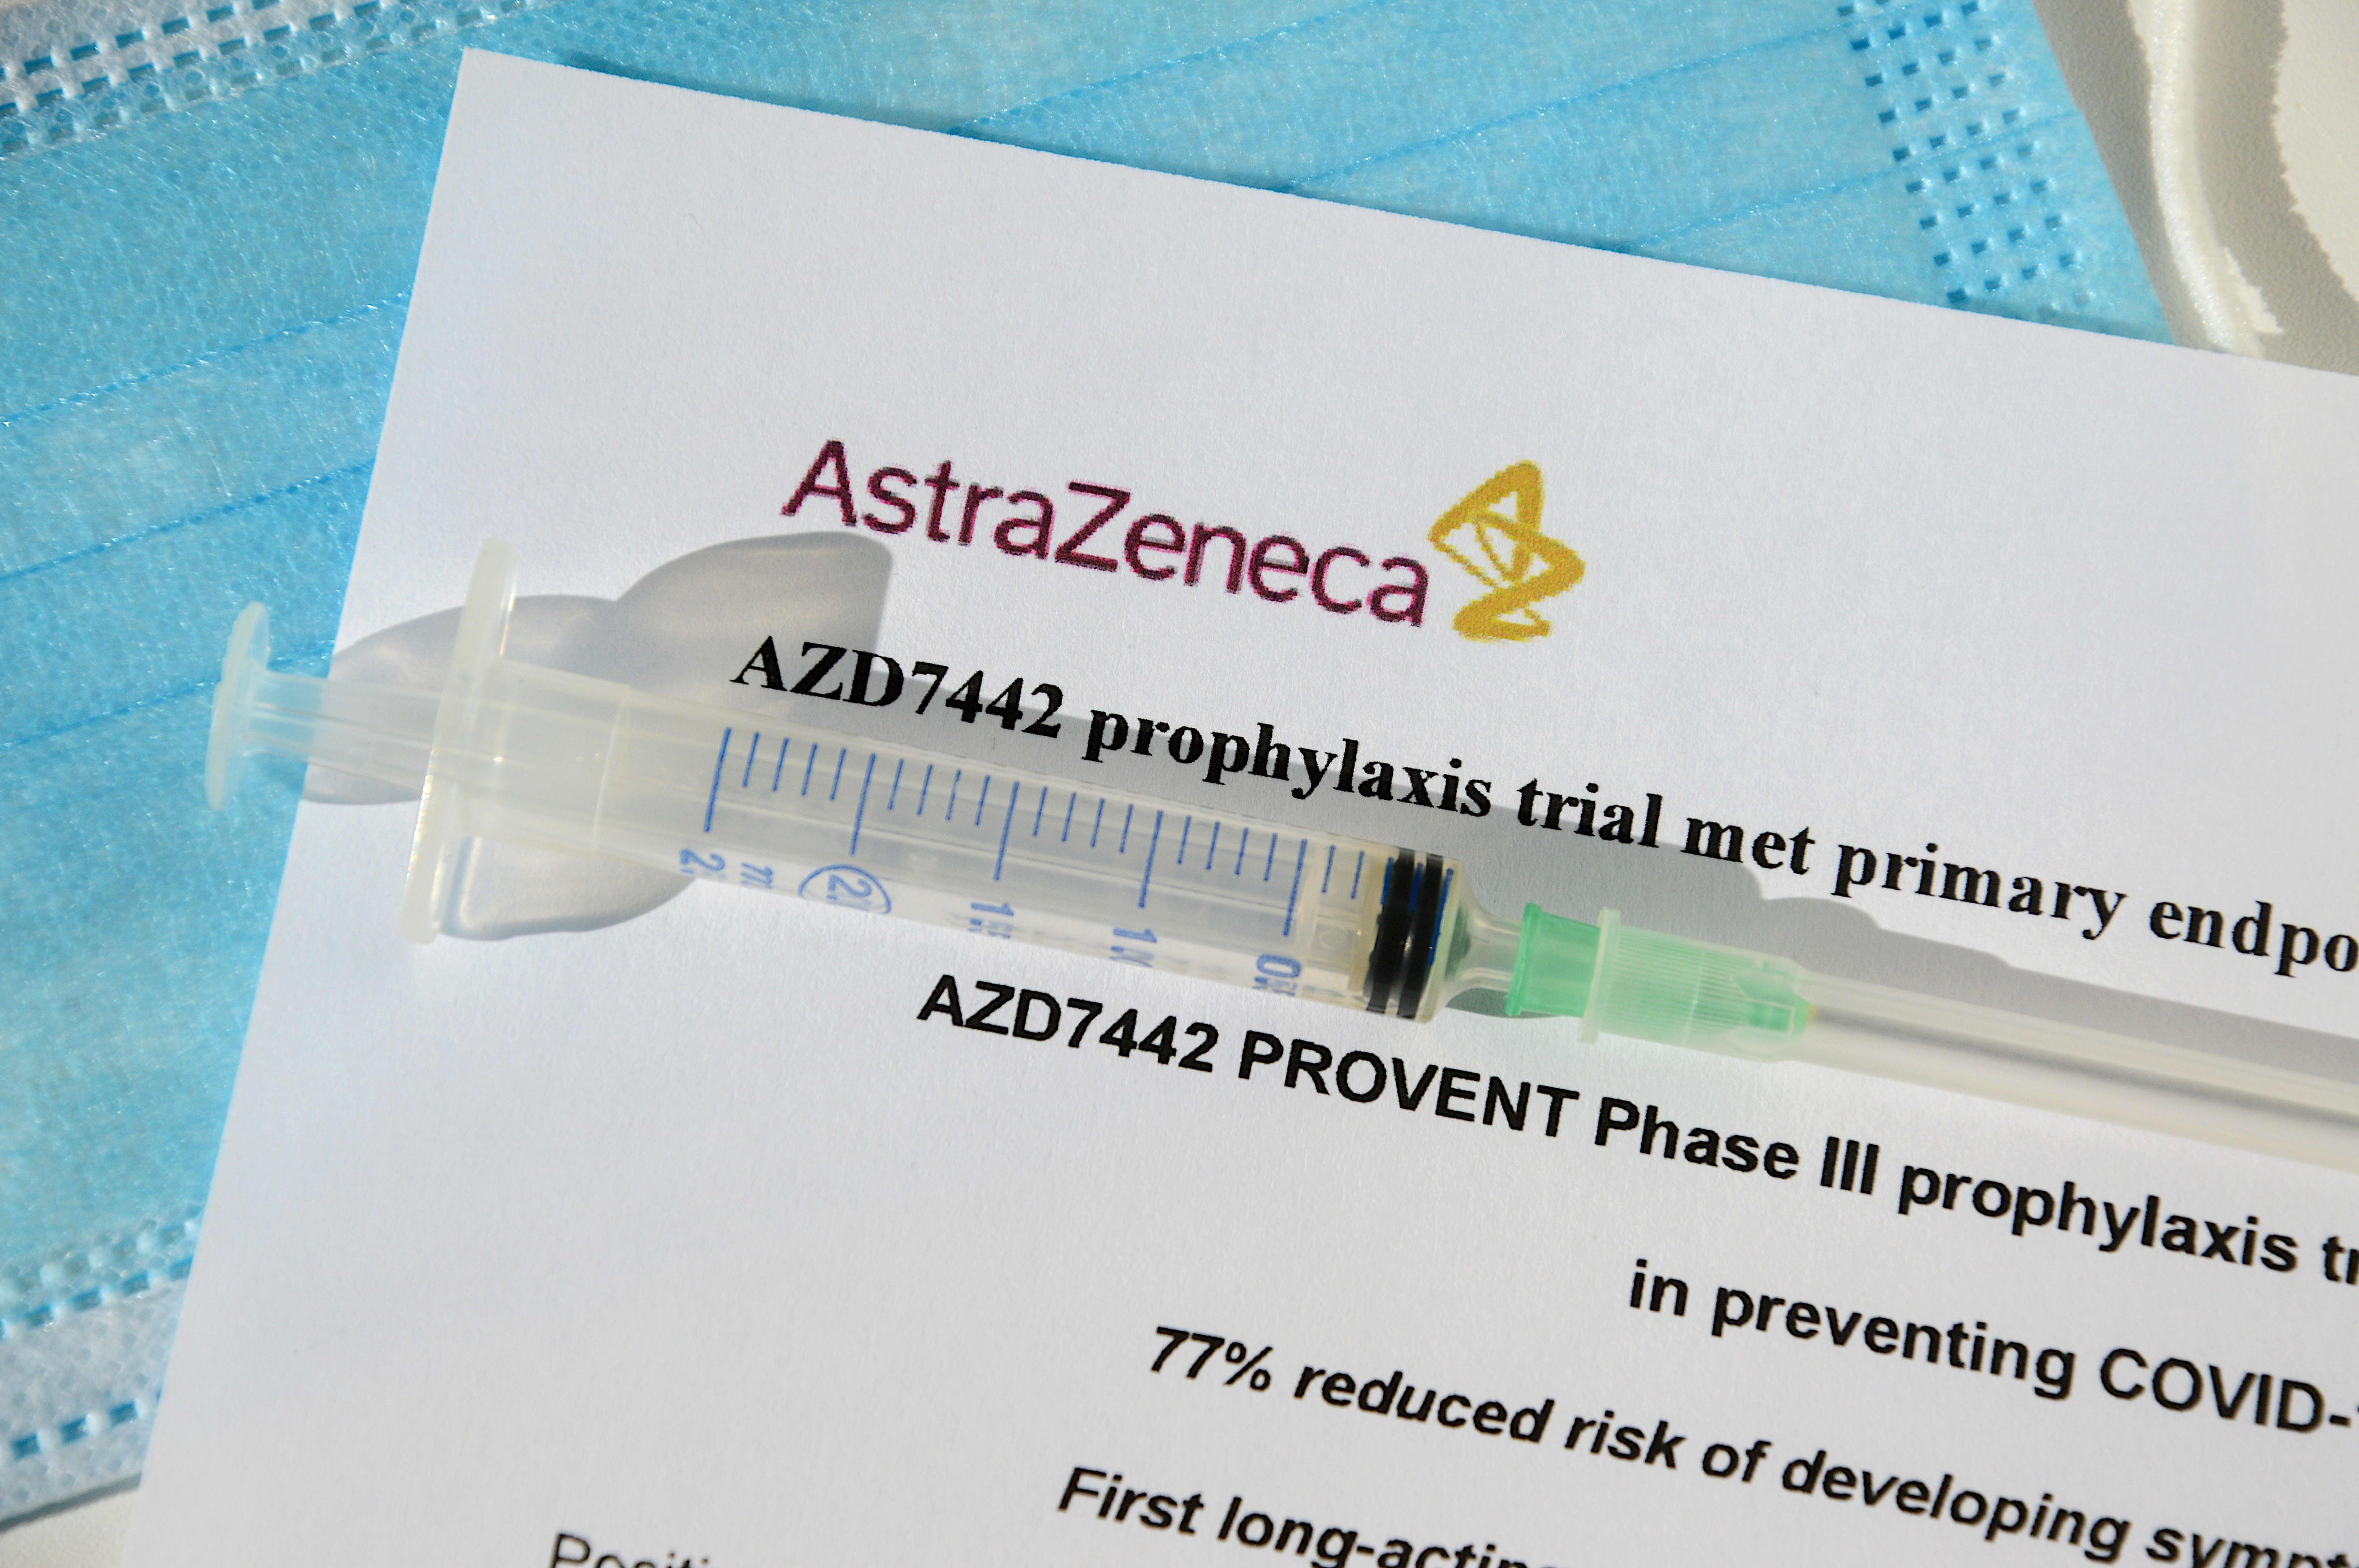 AstraZeneca’s antibody drug over 80% effective at preventing Covid, trial shows